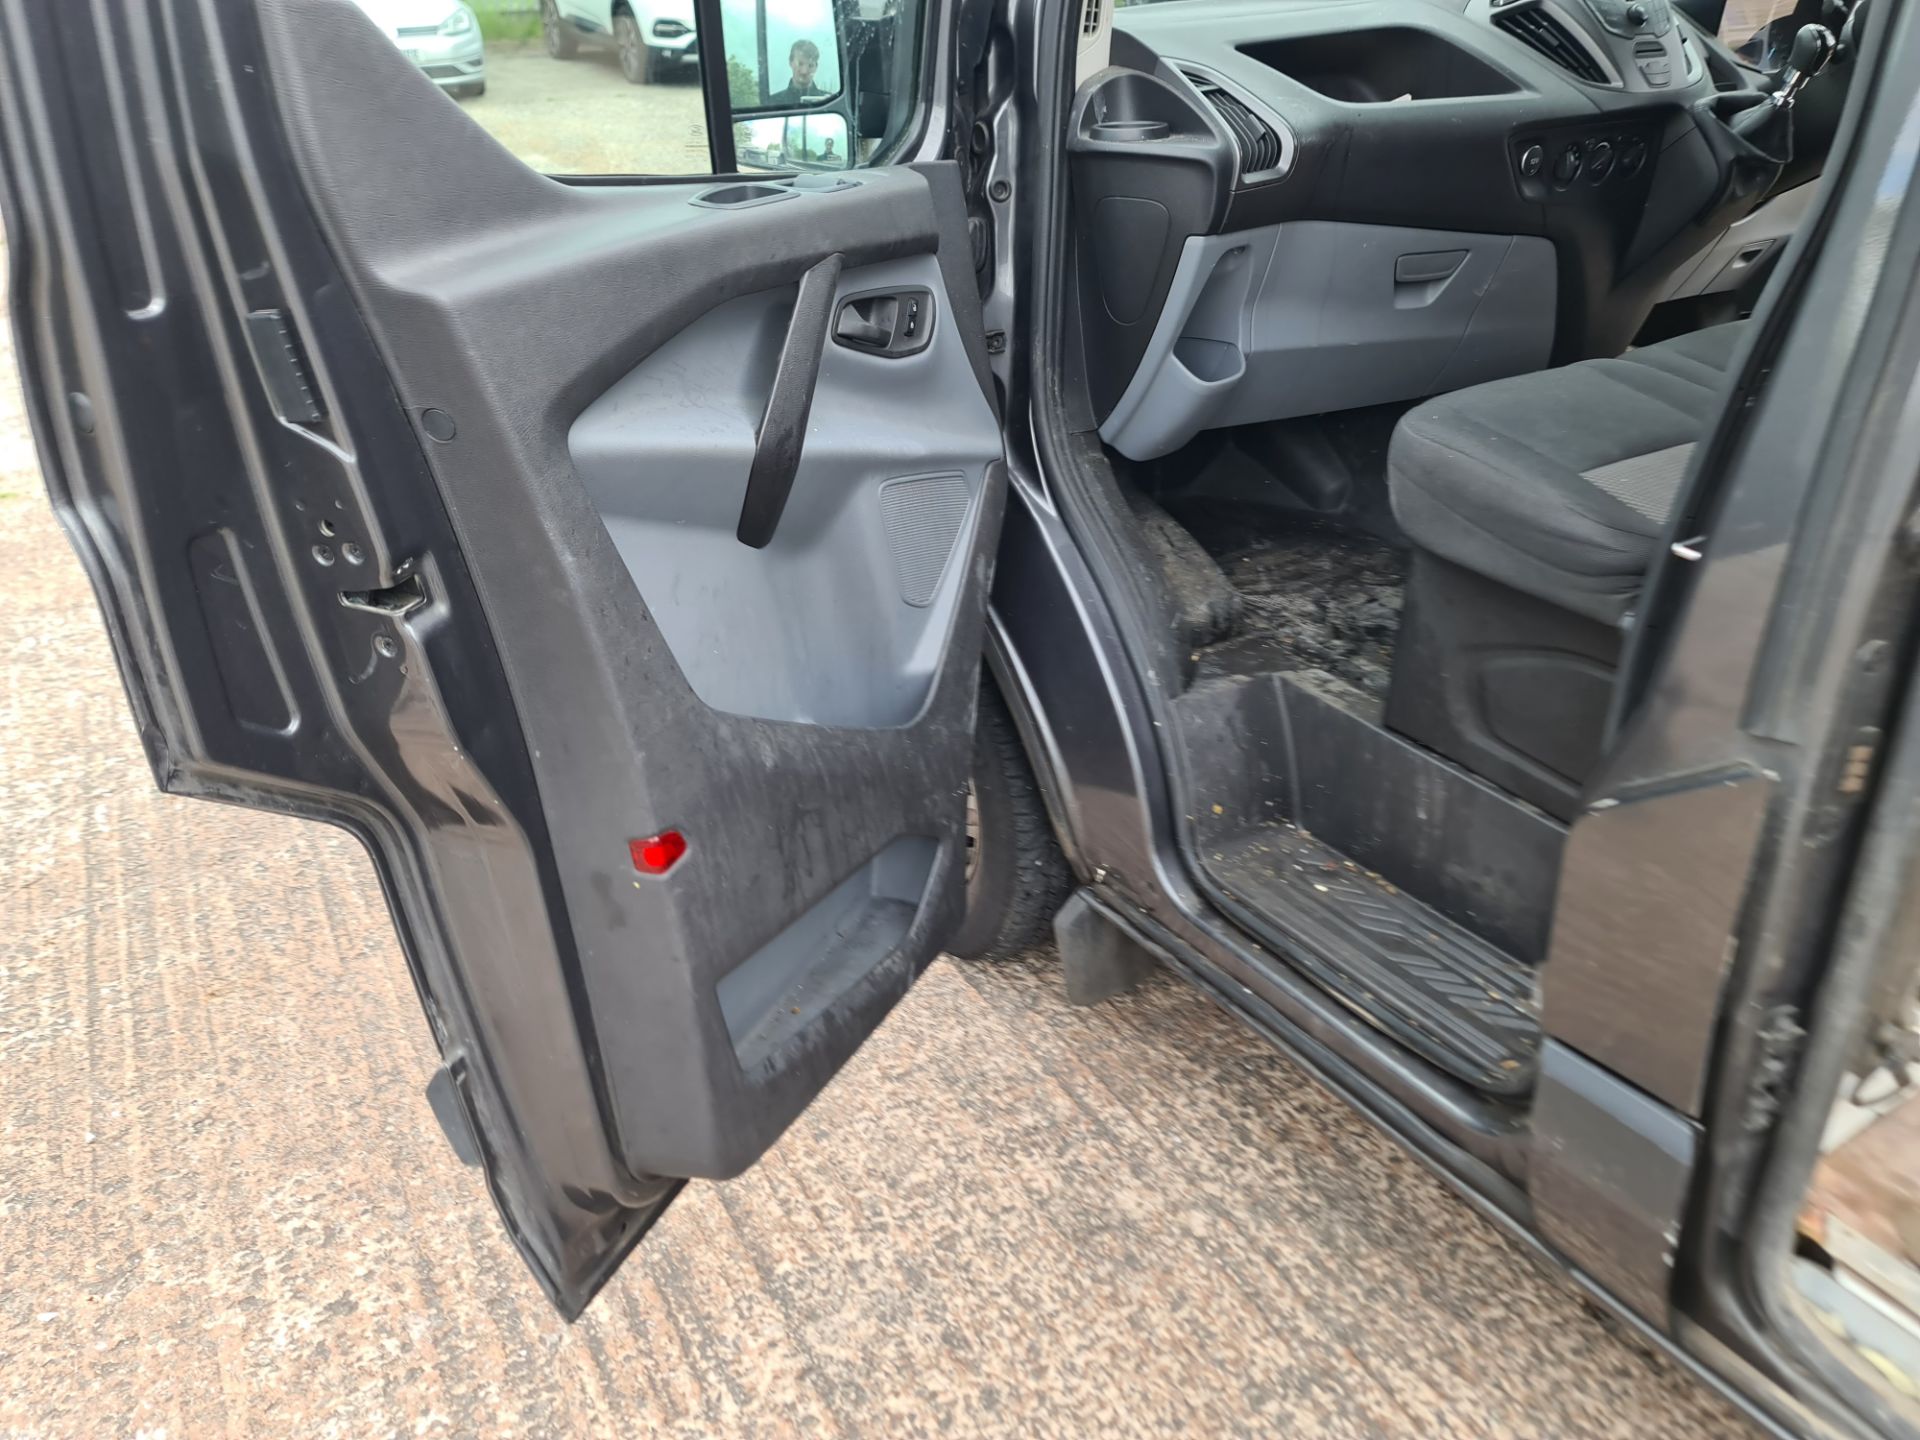 2018 Ford Transit Custom 270 panel van - Image 49 of 74